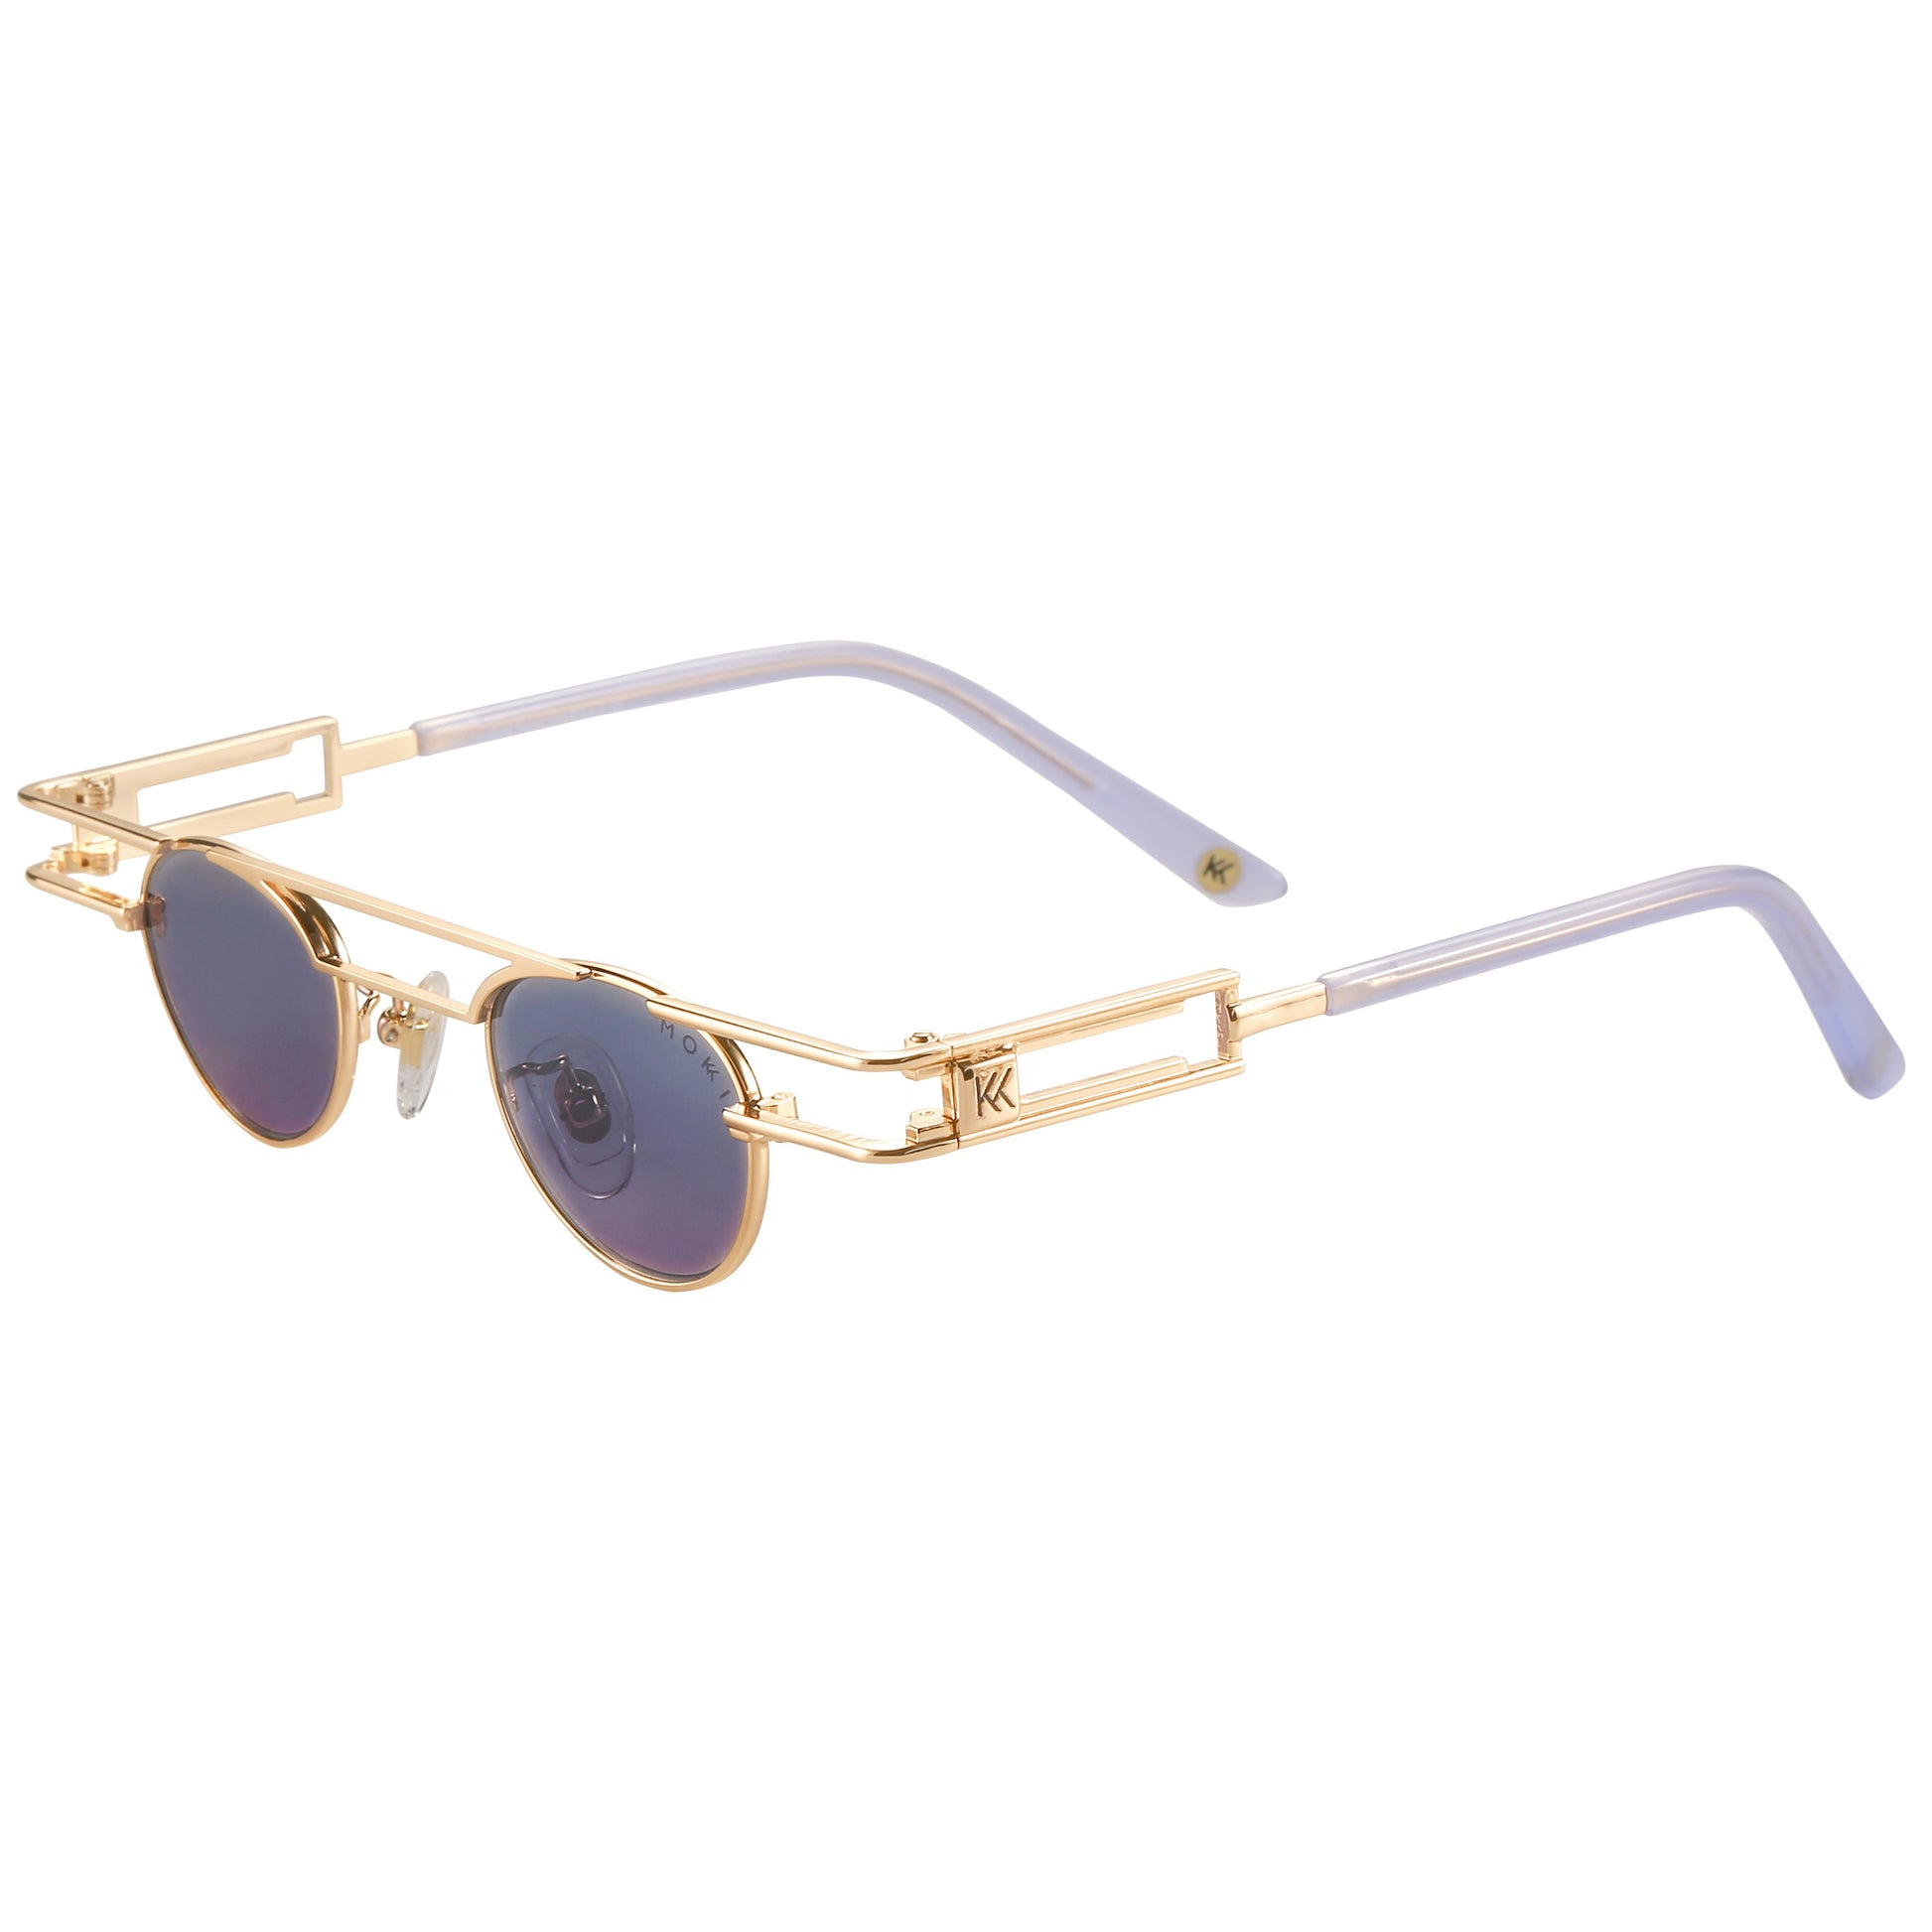 Mokki Petite Ovals 18k Gold-plated sunglasses with purple lenses